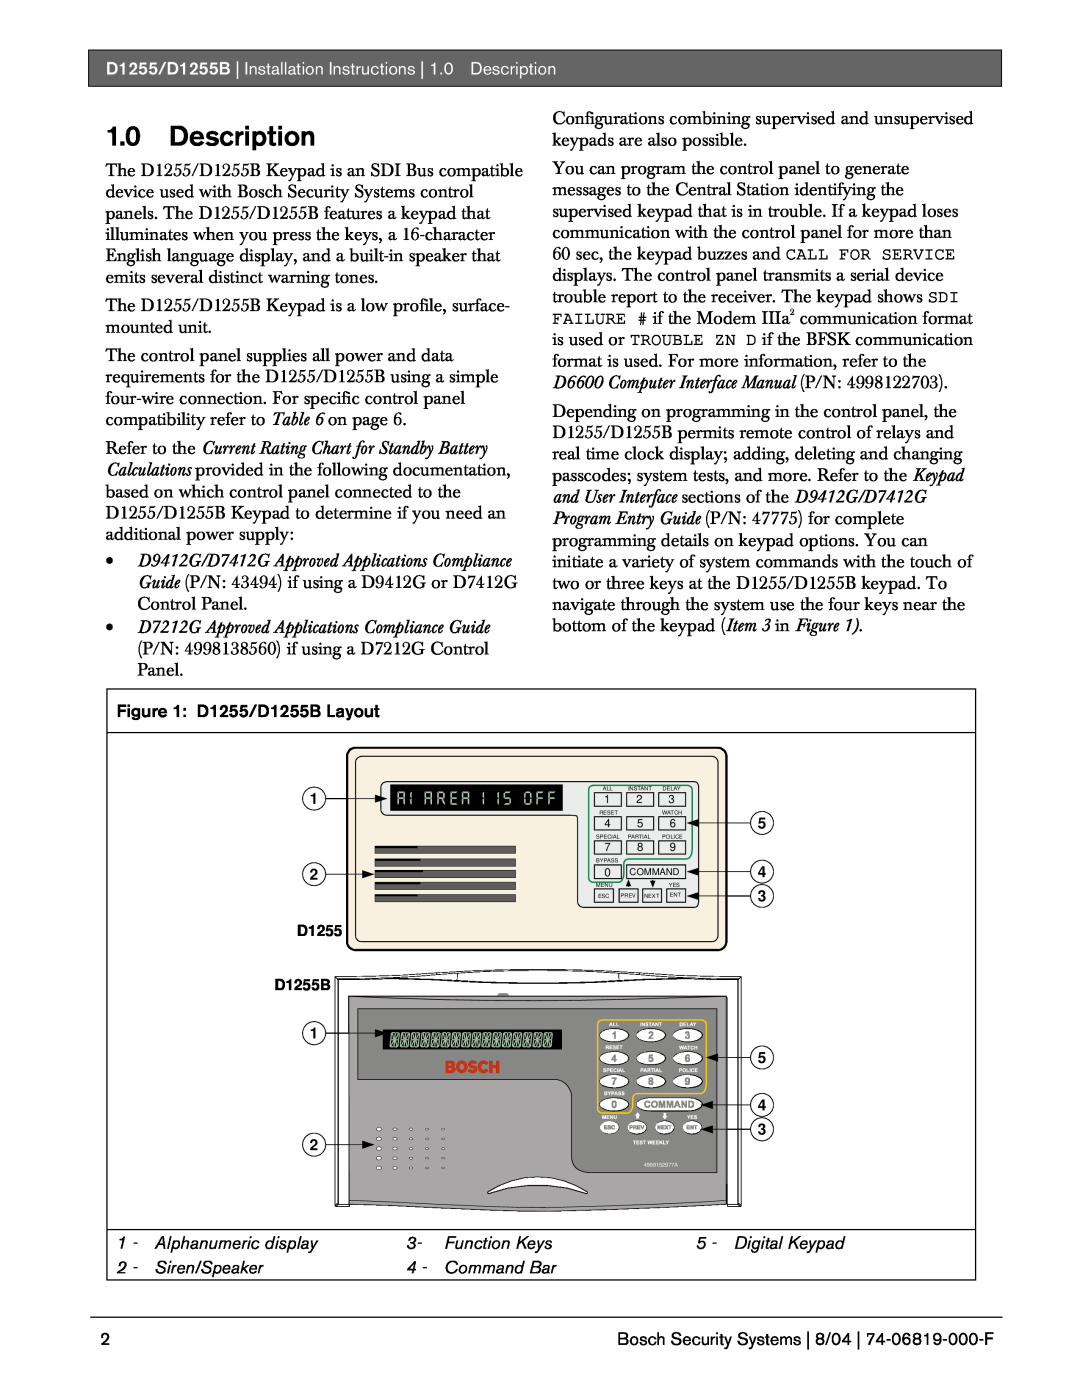 Bosch Appliances installation instructions Description, D1255/D1255B Layout, Bosch Security Systems 8/04 74-06819-000-F 